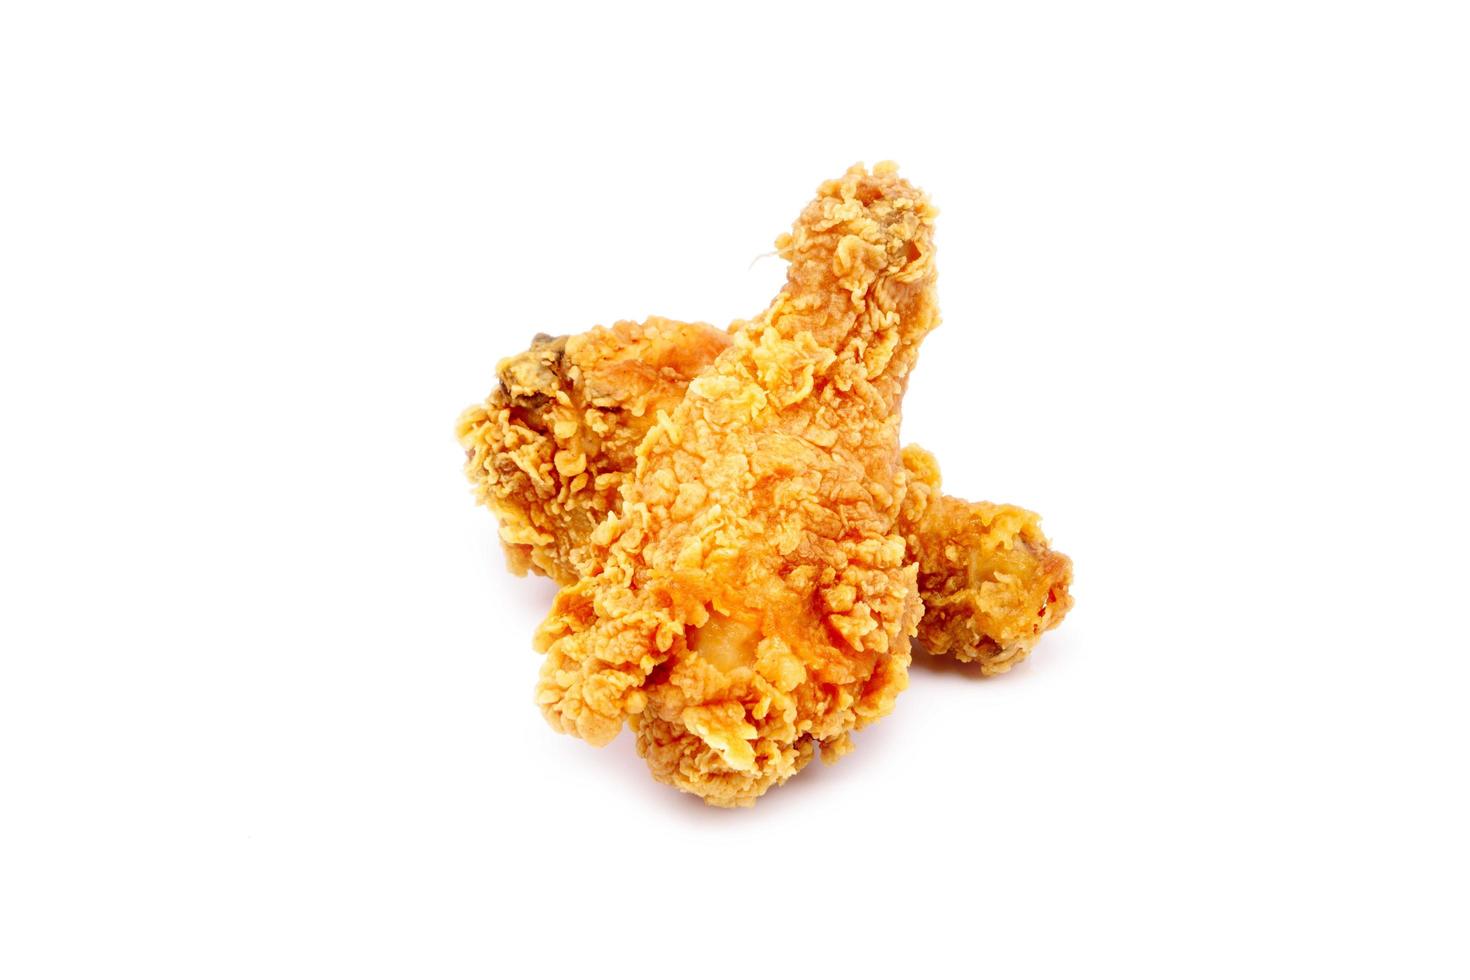 stekt kyckling på vit bakgrund foto